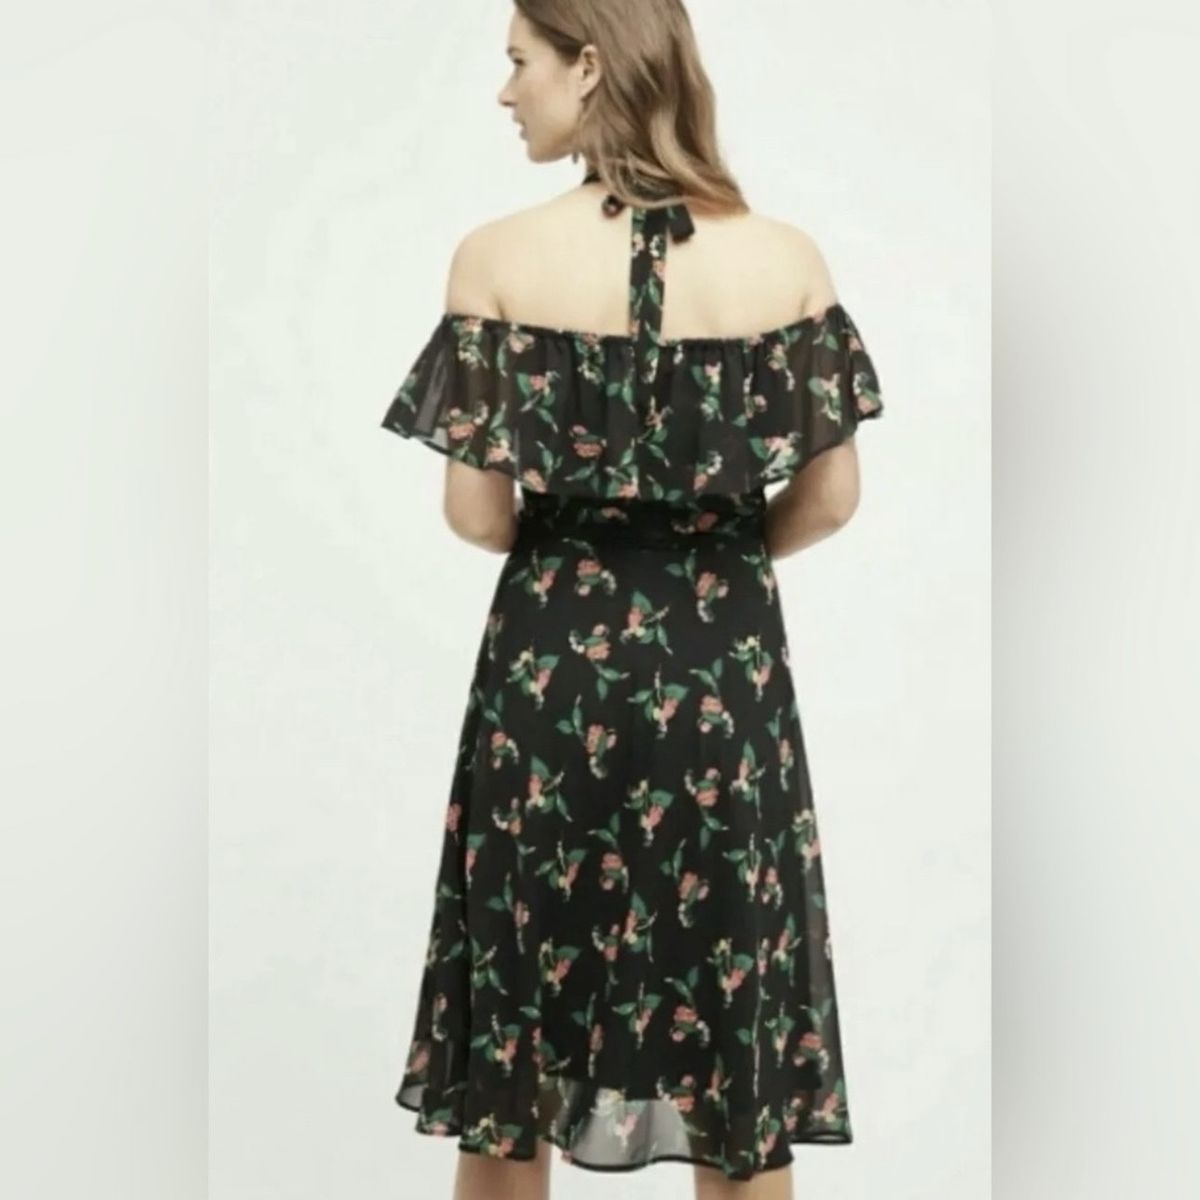 Anthropologie Size 14 Off The Shoulder Floral Black Cocktail Dress on Queenly